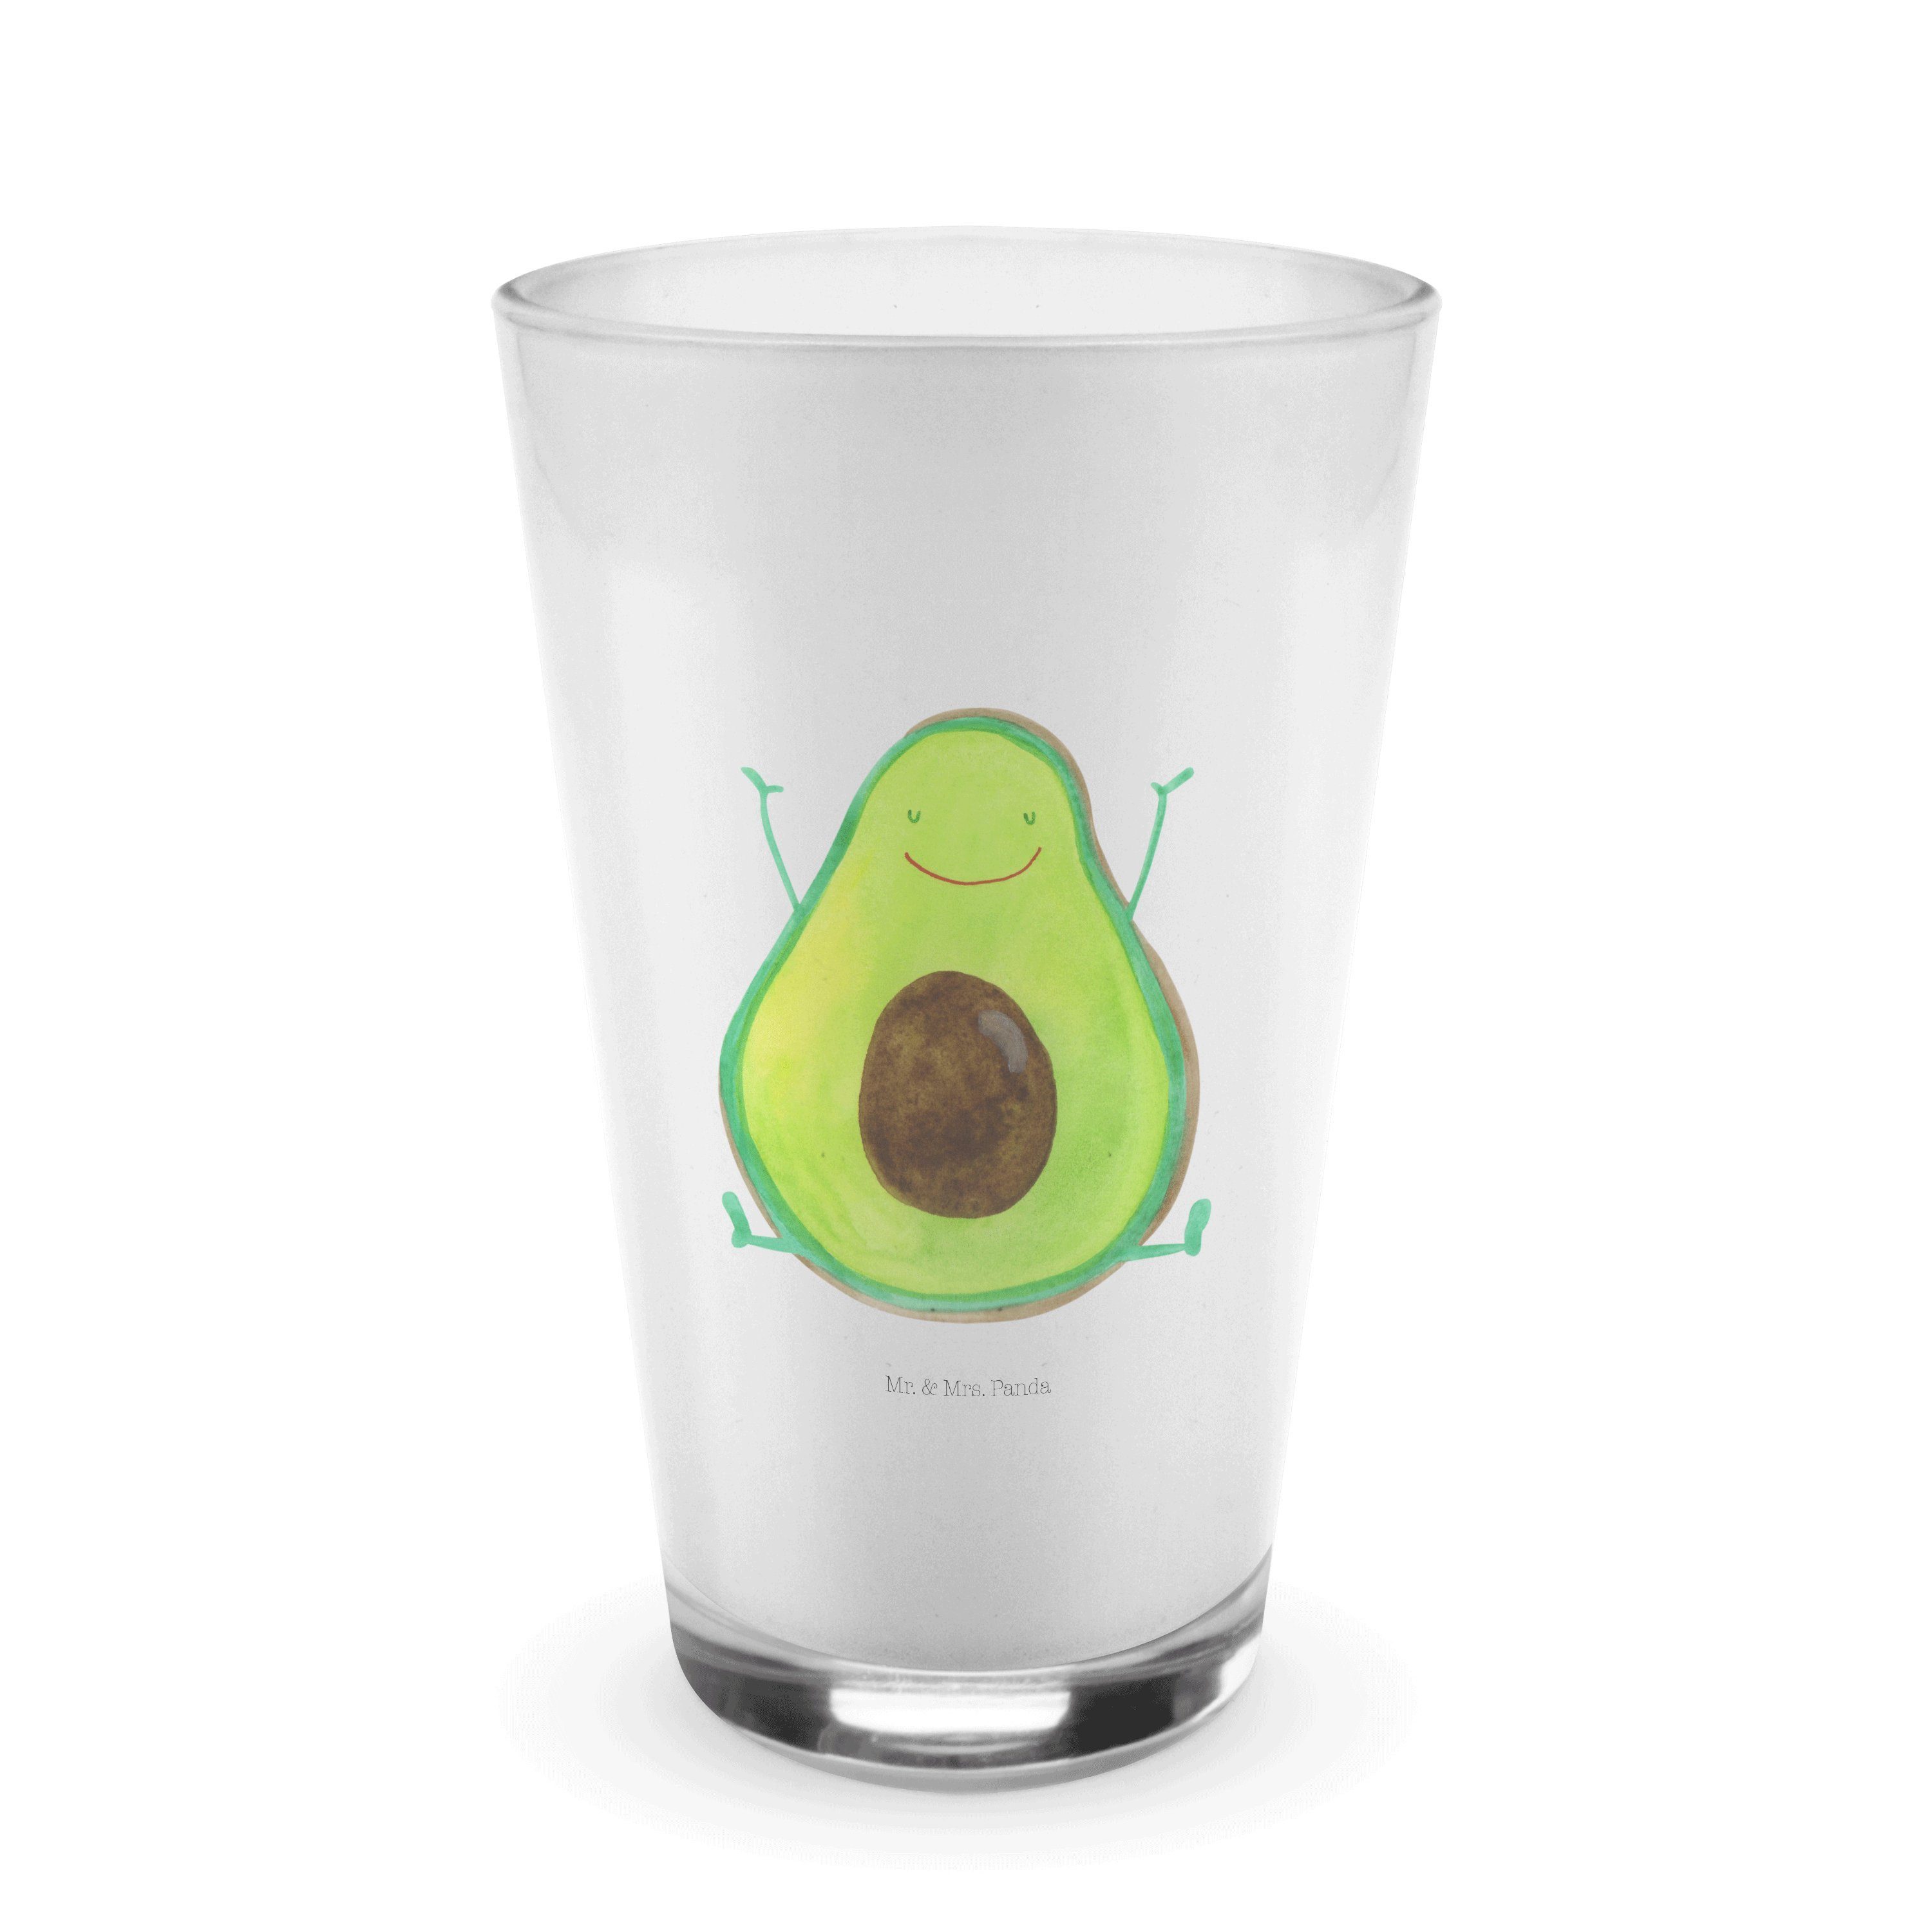 Mr. & Mrs. Panda Glas Avocado Glücklich - Transparent - Geschenk, Vegan, Chaos, Latte Macch, Premium Glas, Edles Matt-Design